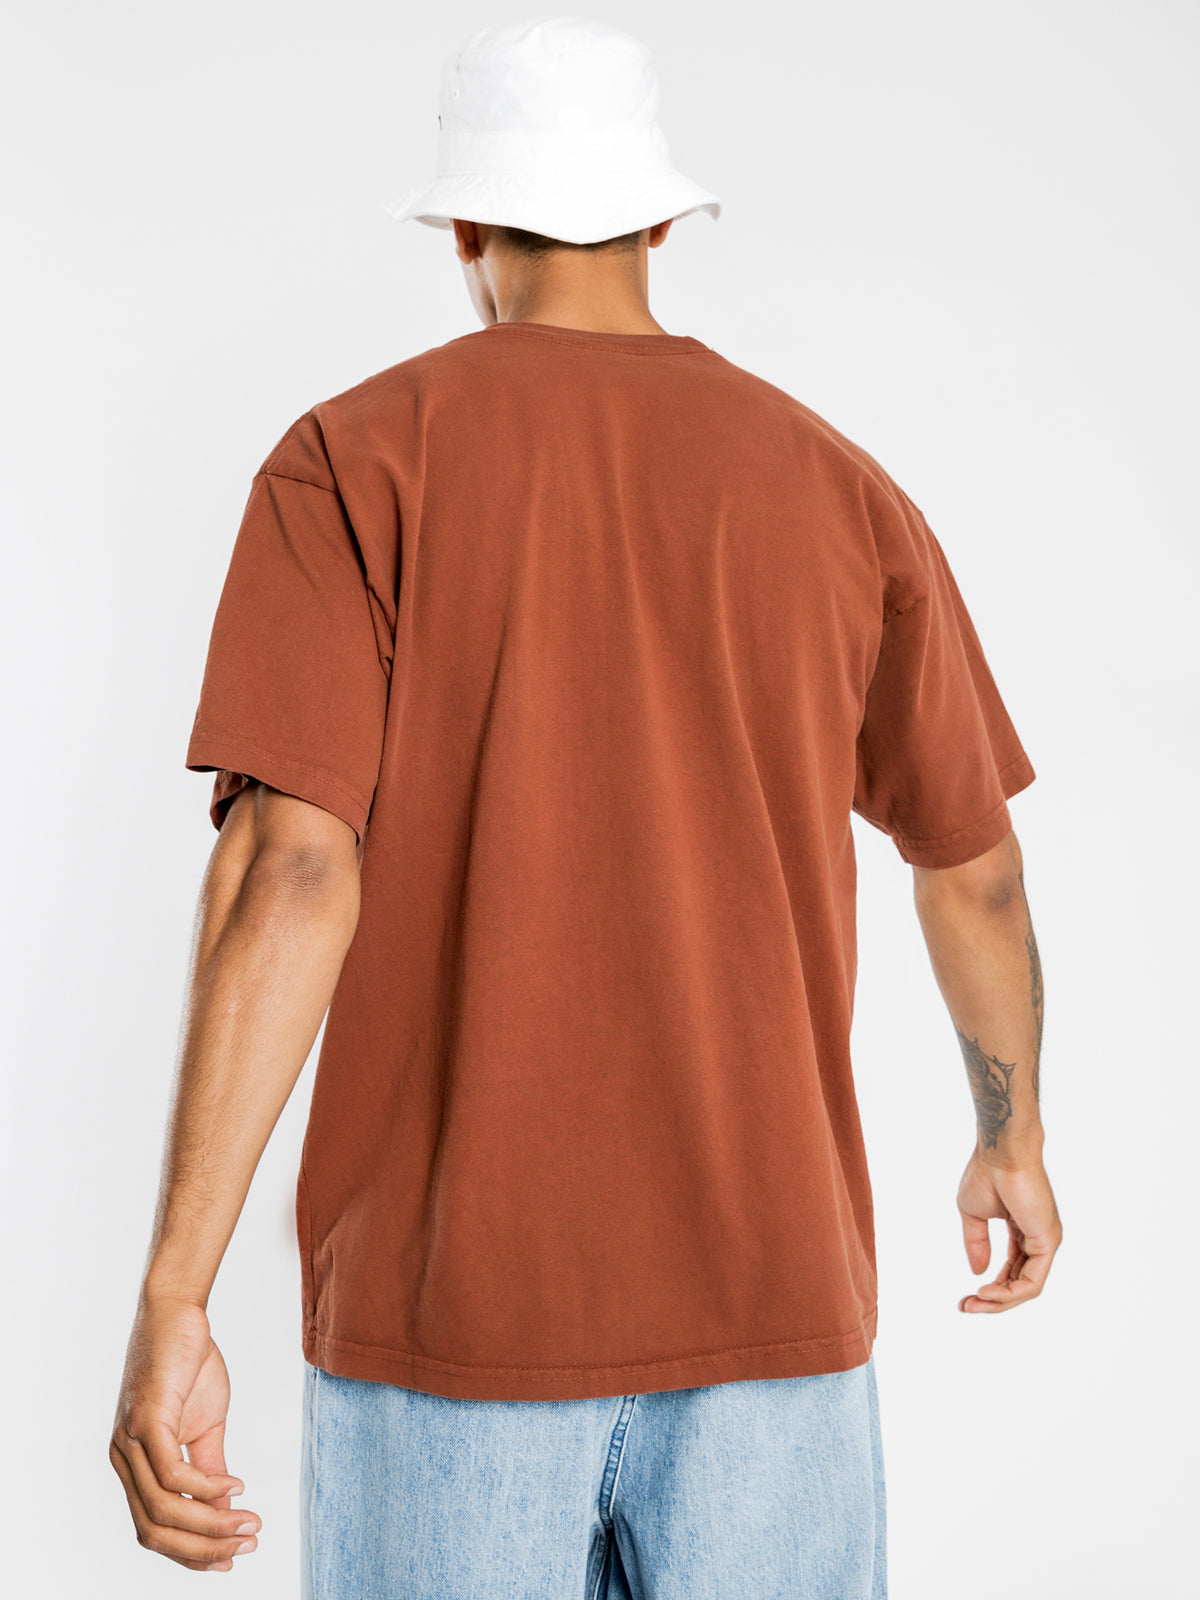 Academic 2 T-Shirt in Brown